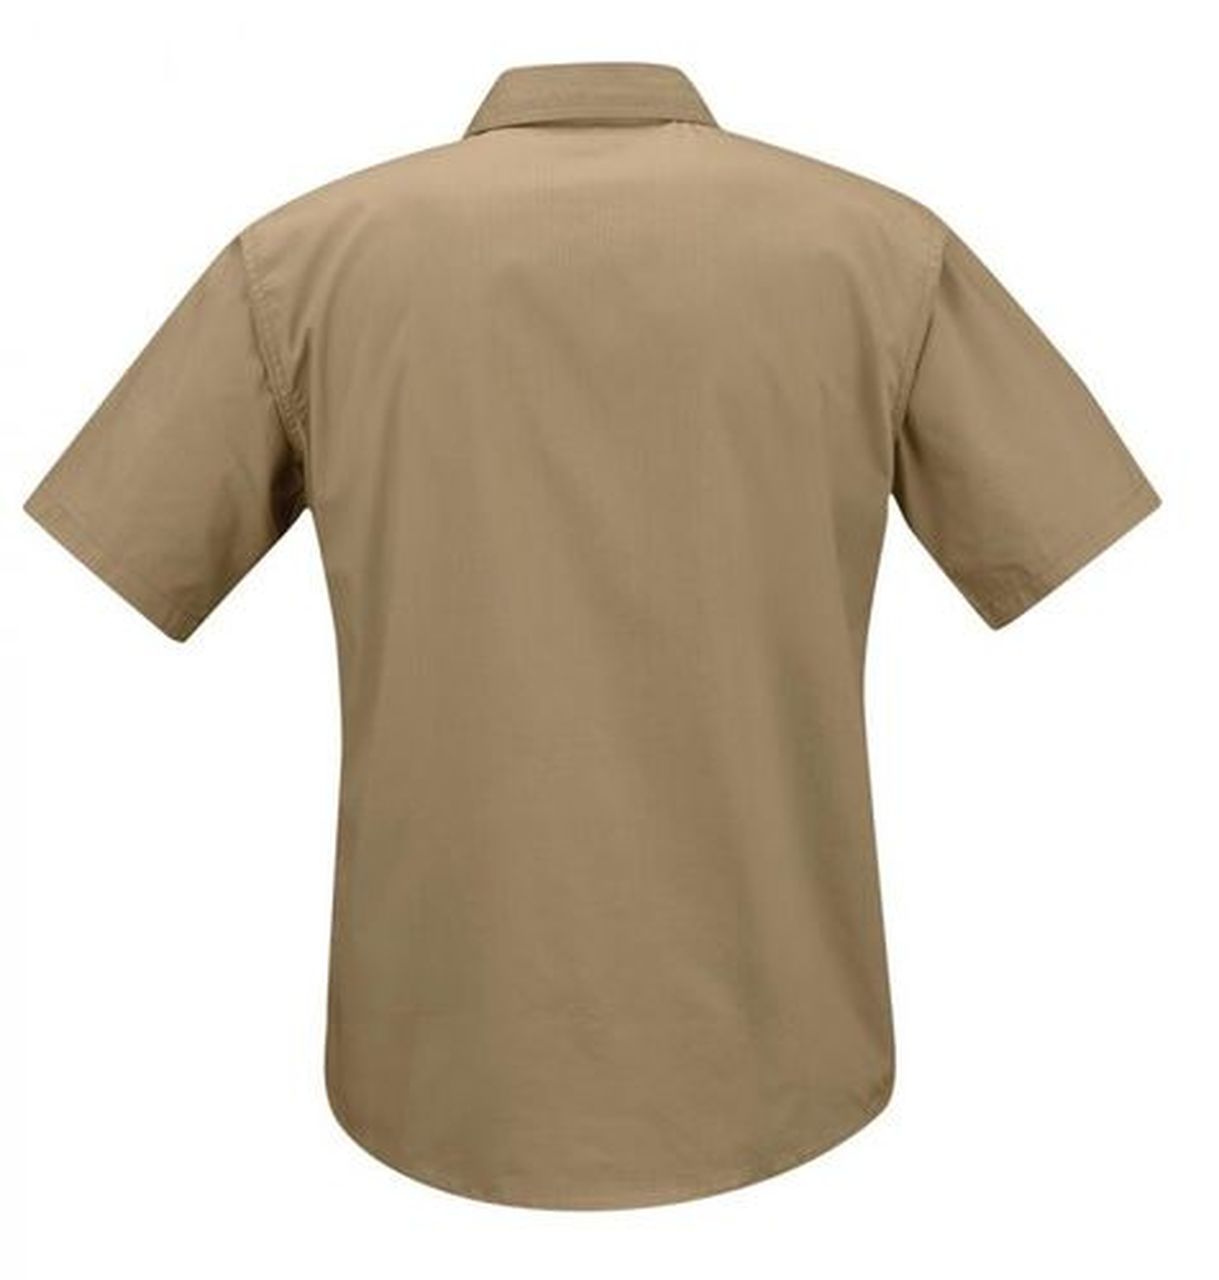 Propper Men's Kinetic Shirt Short Sleeve Shirt, Black, Small